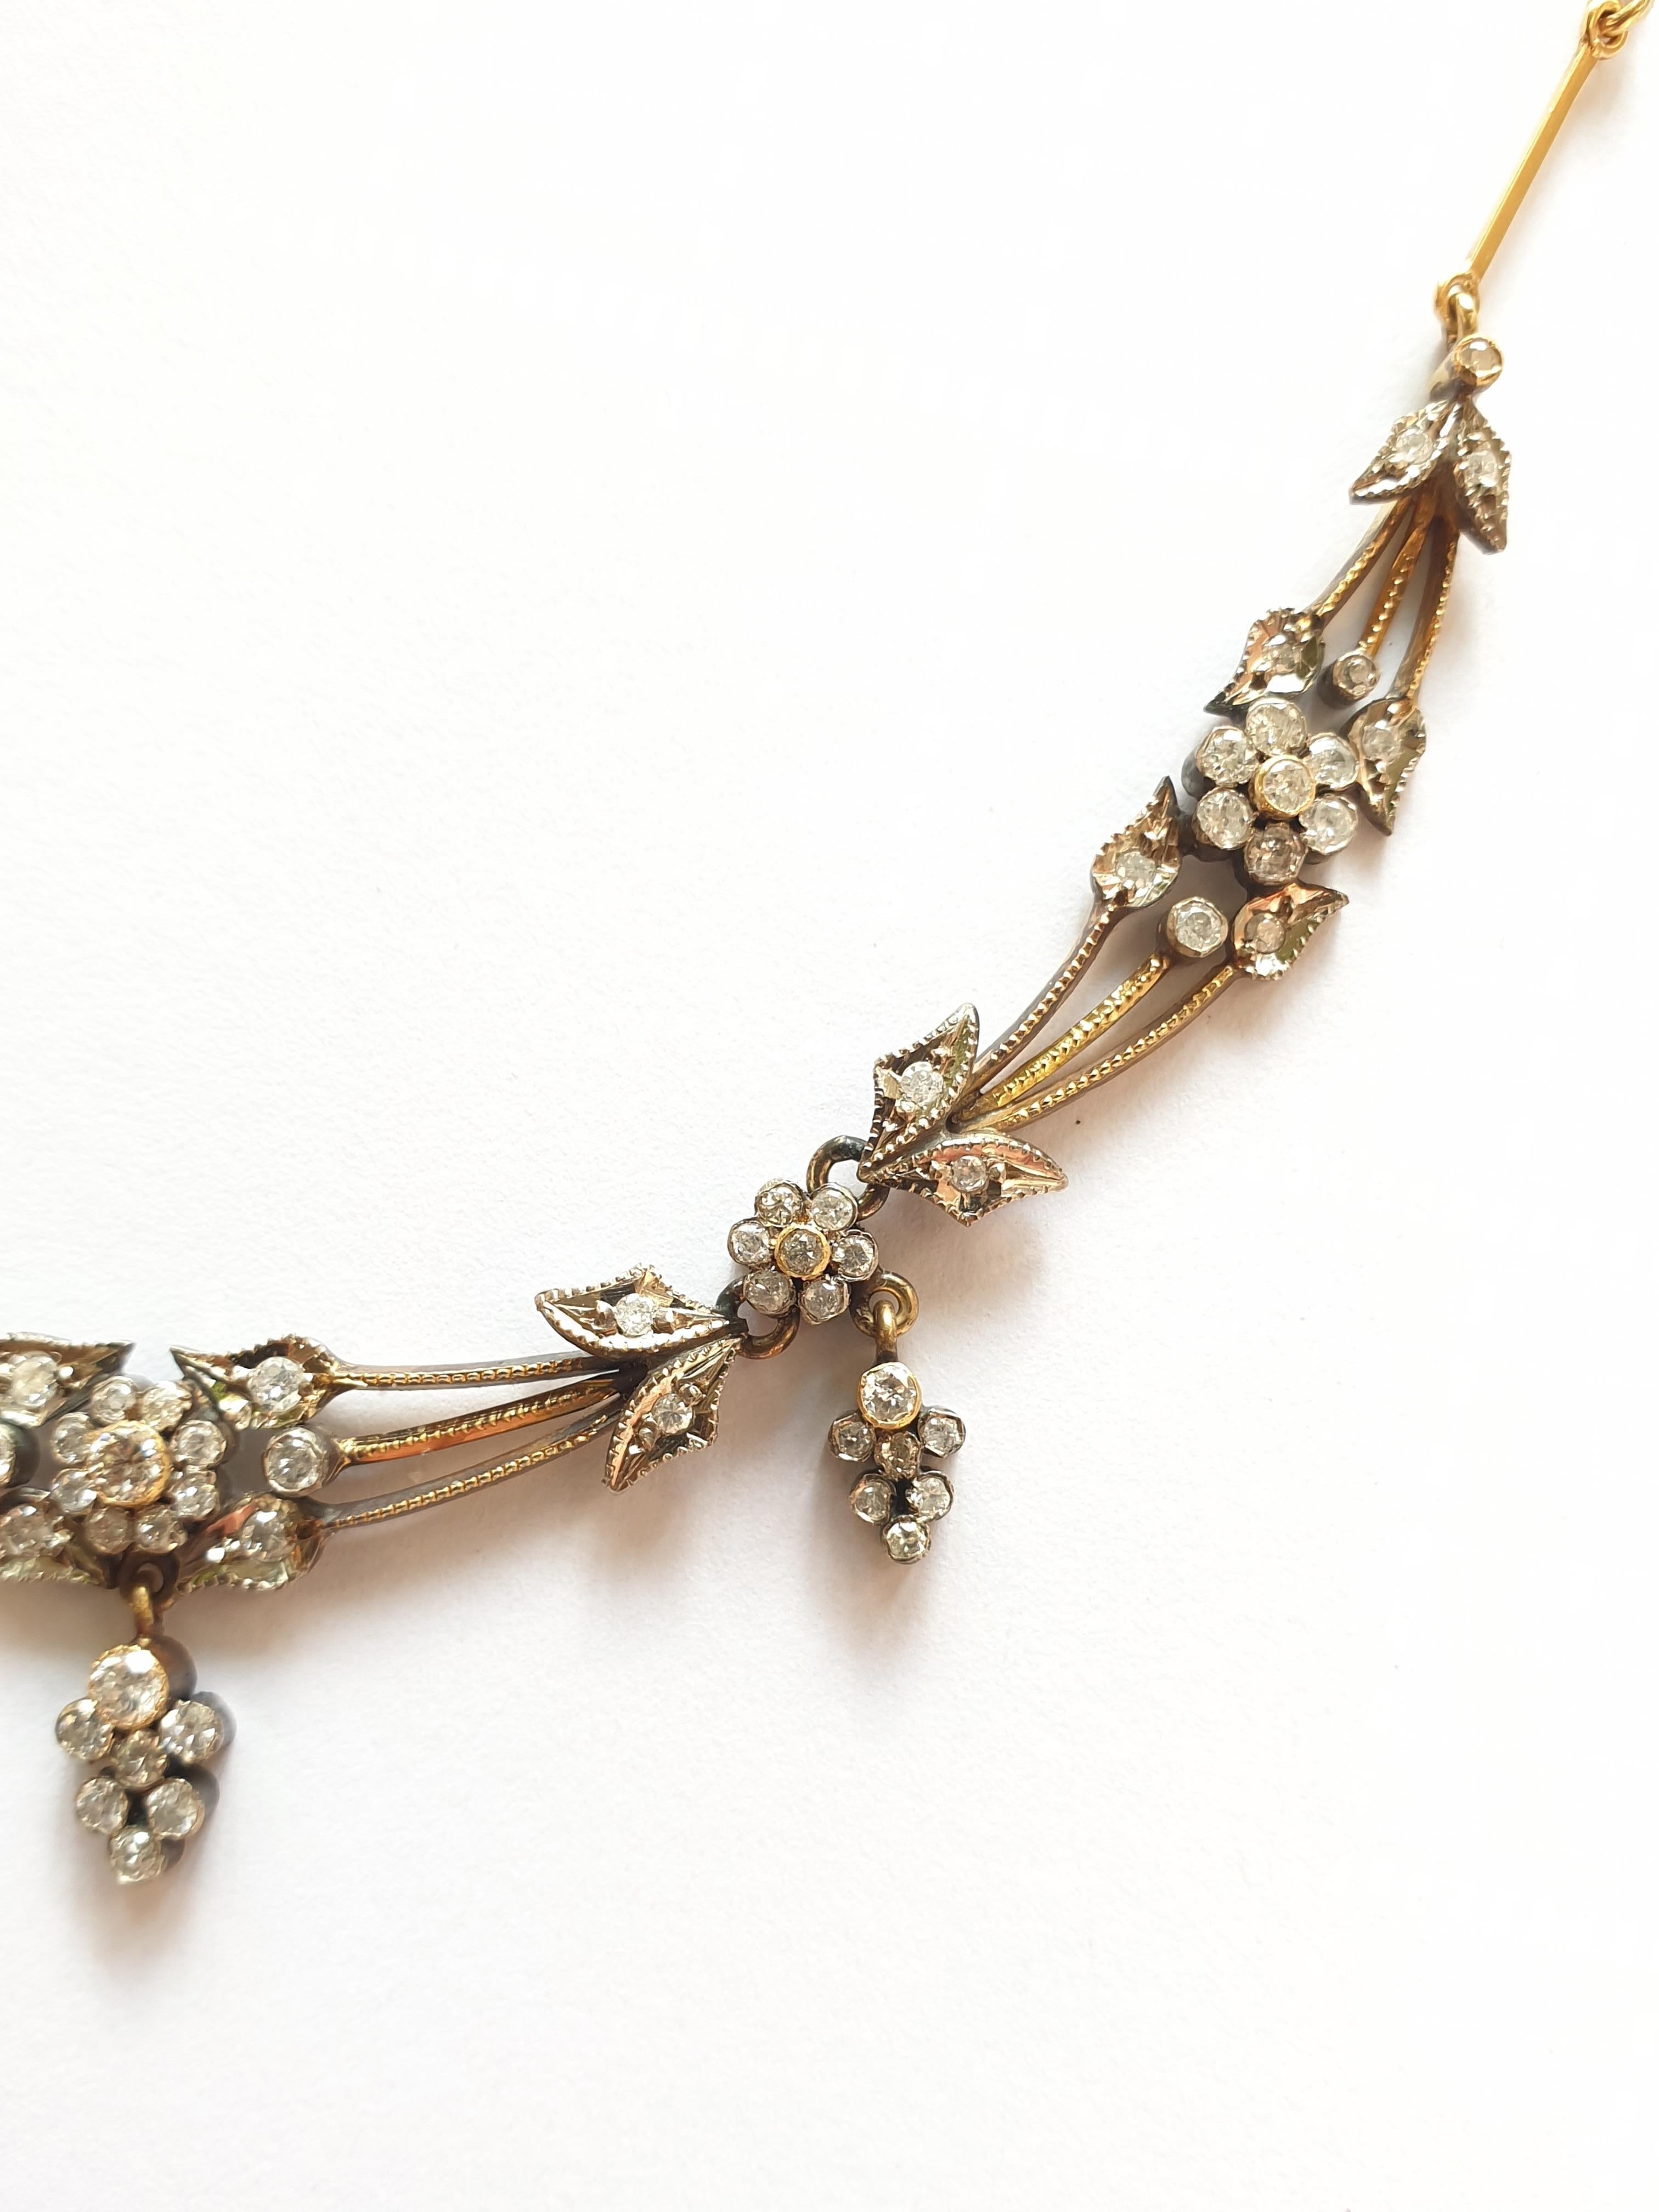 Brilliant Cut Diamonds Yellow Gold Chain Necklace For Sale